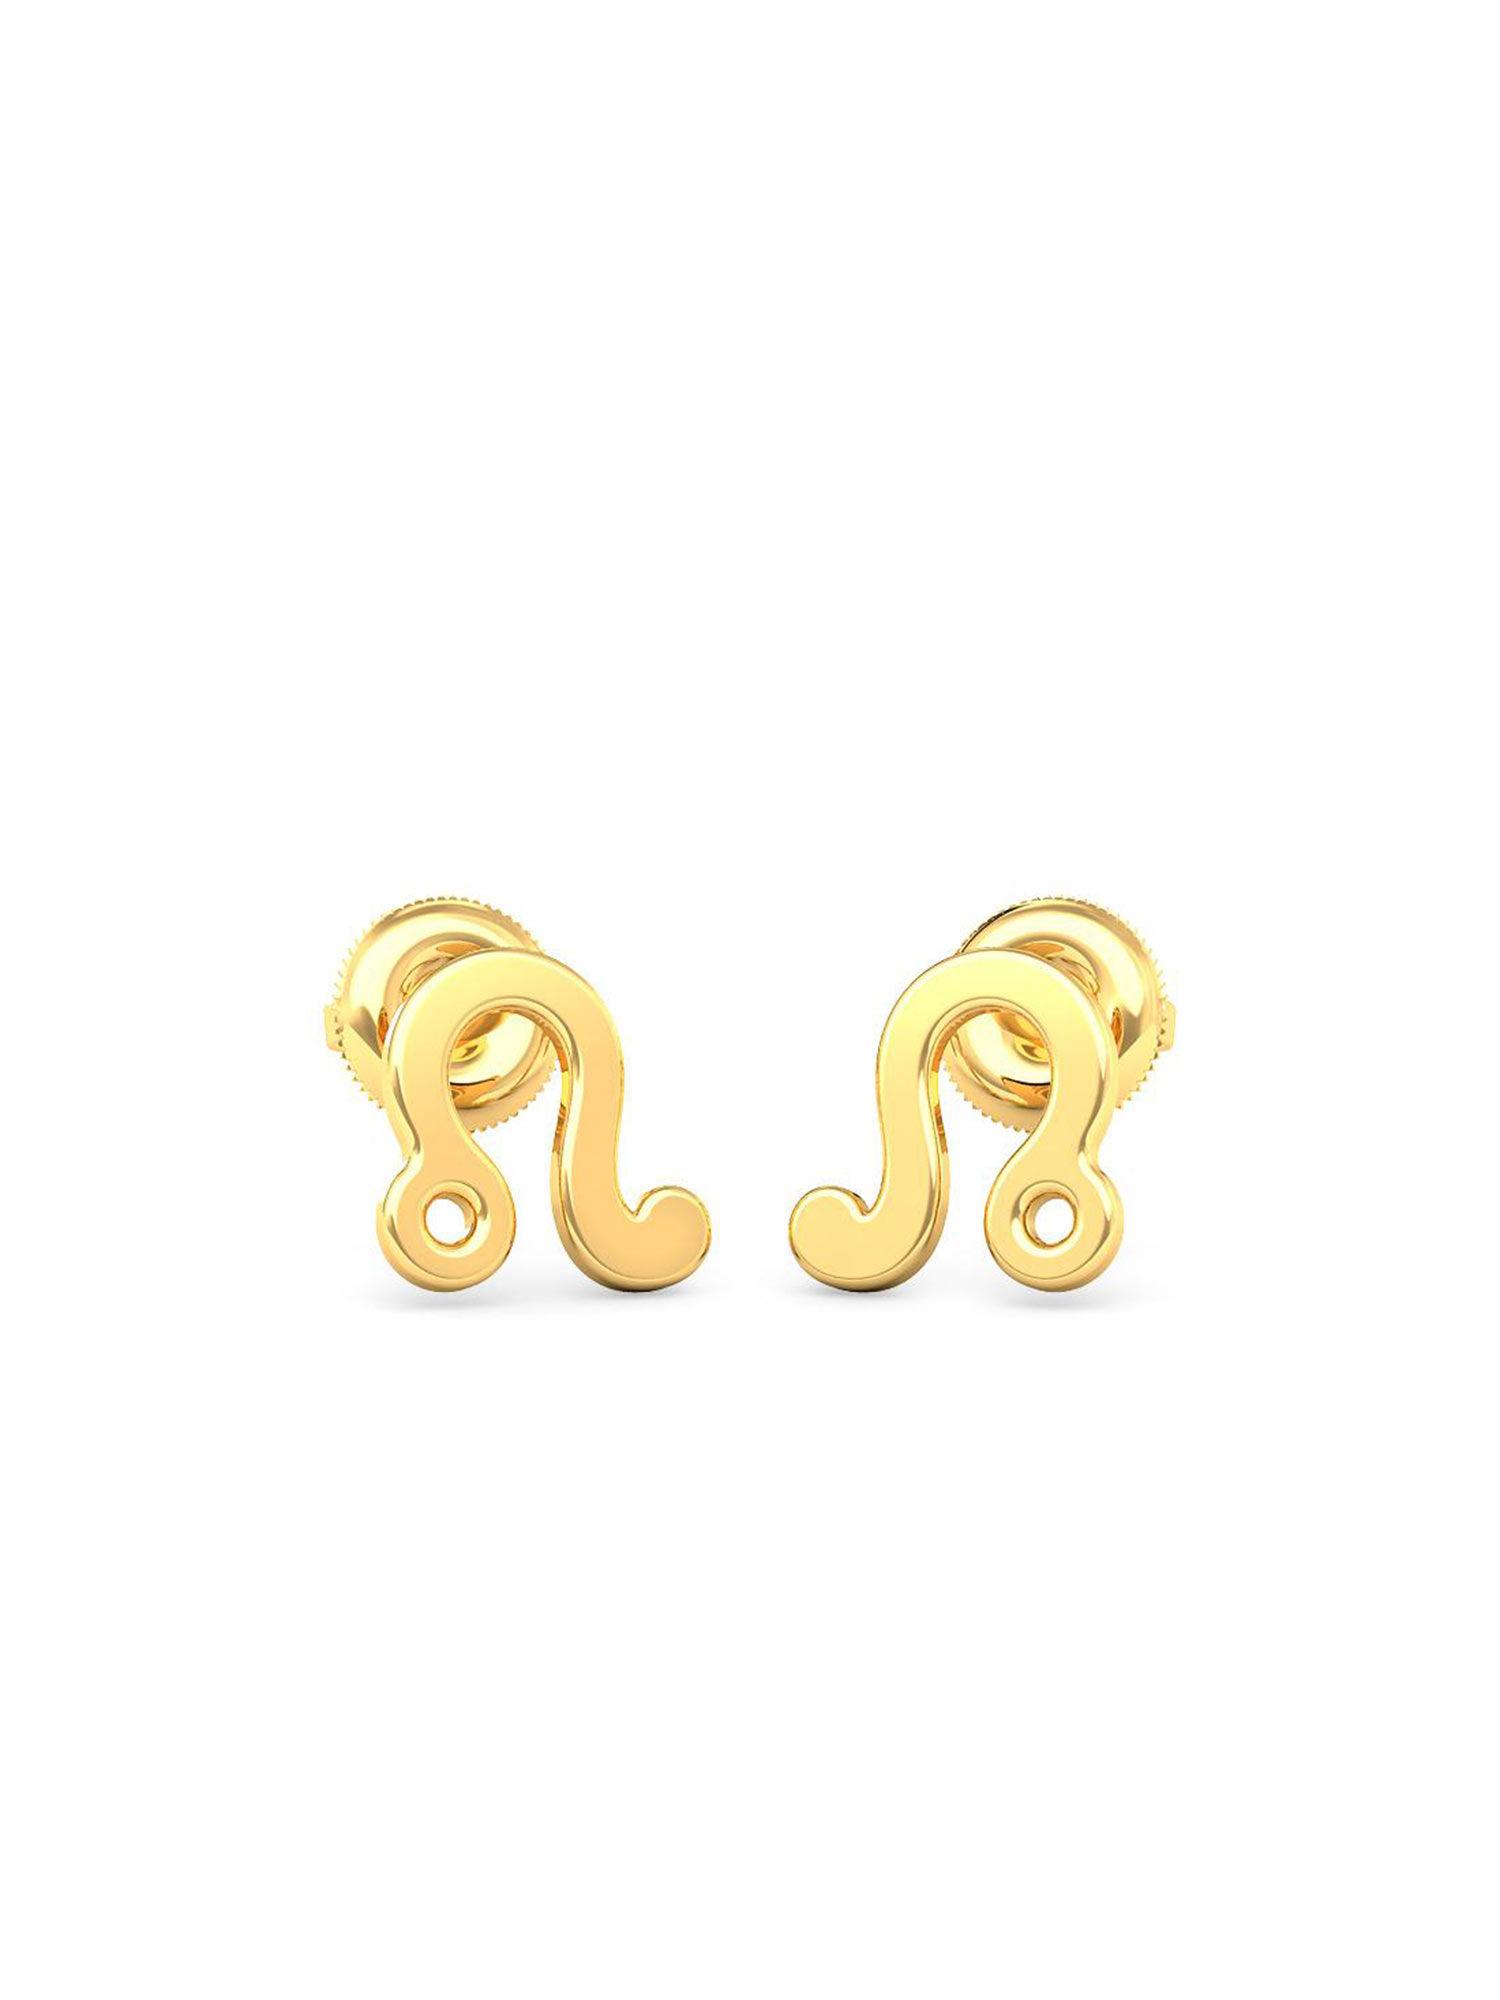 14k yellow gold leo stud earring for women